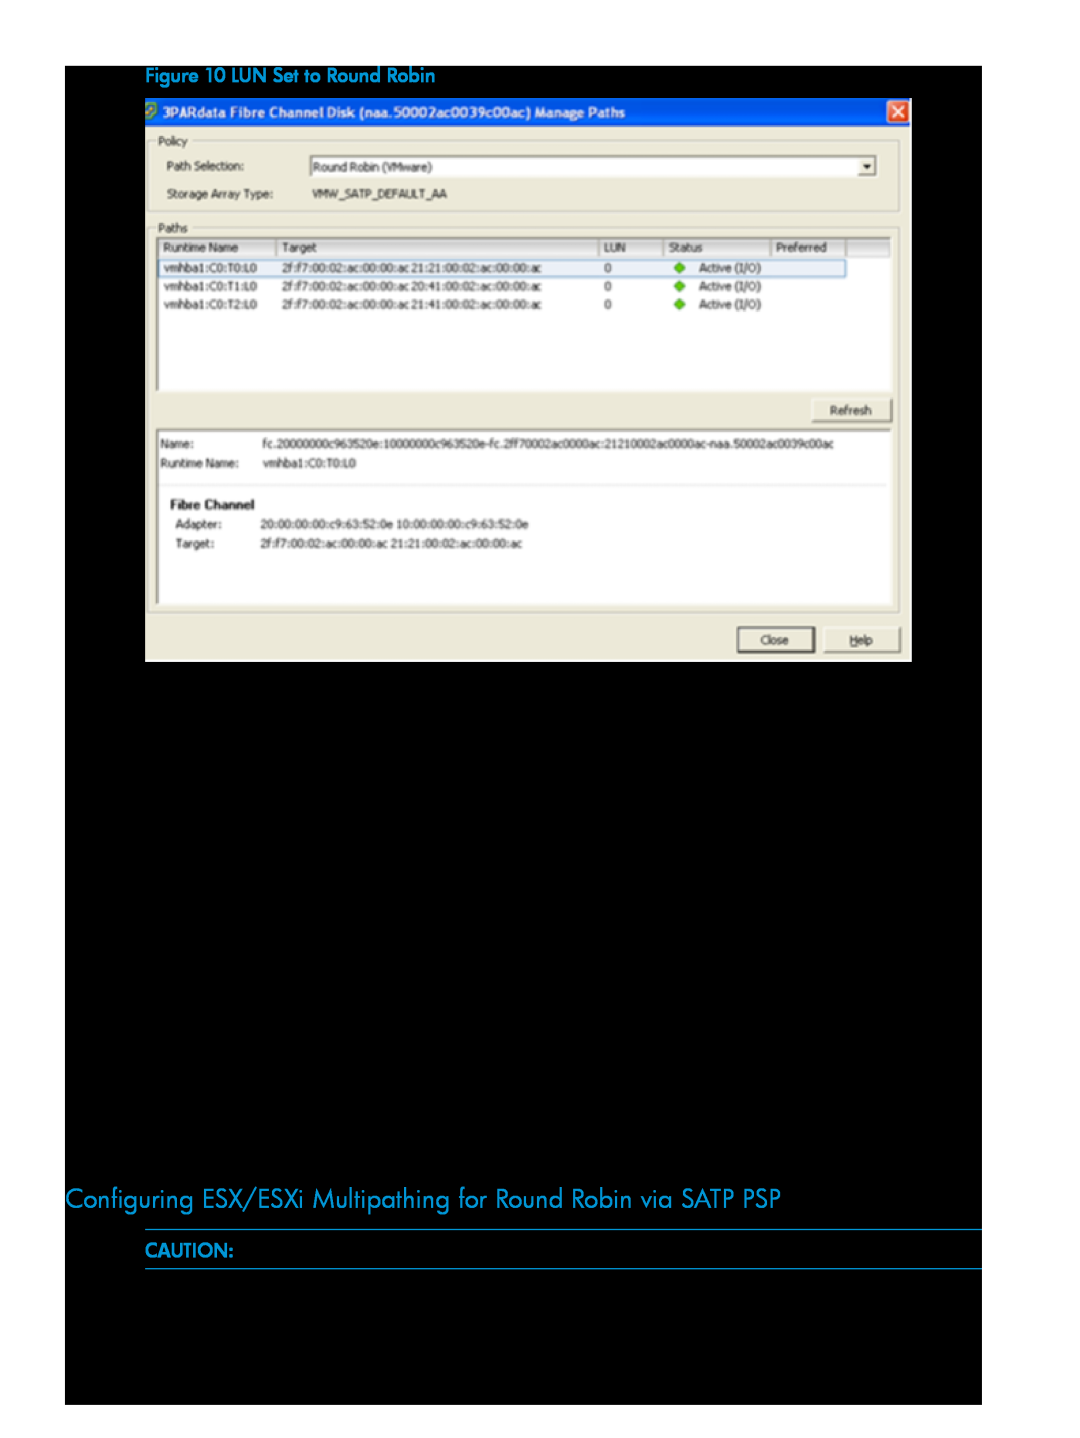 HP QR516B manual Configuring ESX/ESXi Multipathing for Round Robin via SATP PSP, LUN Set to Round Robin 